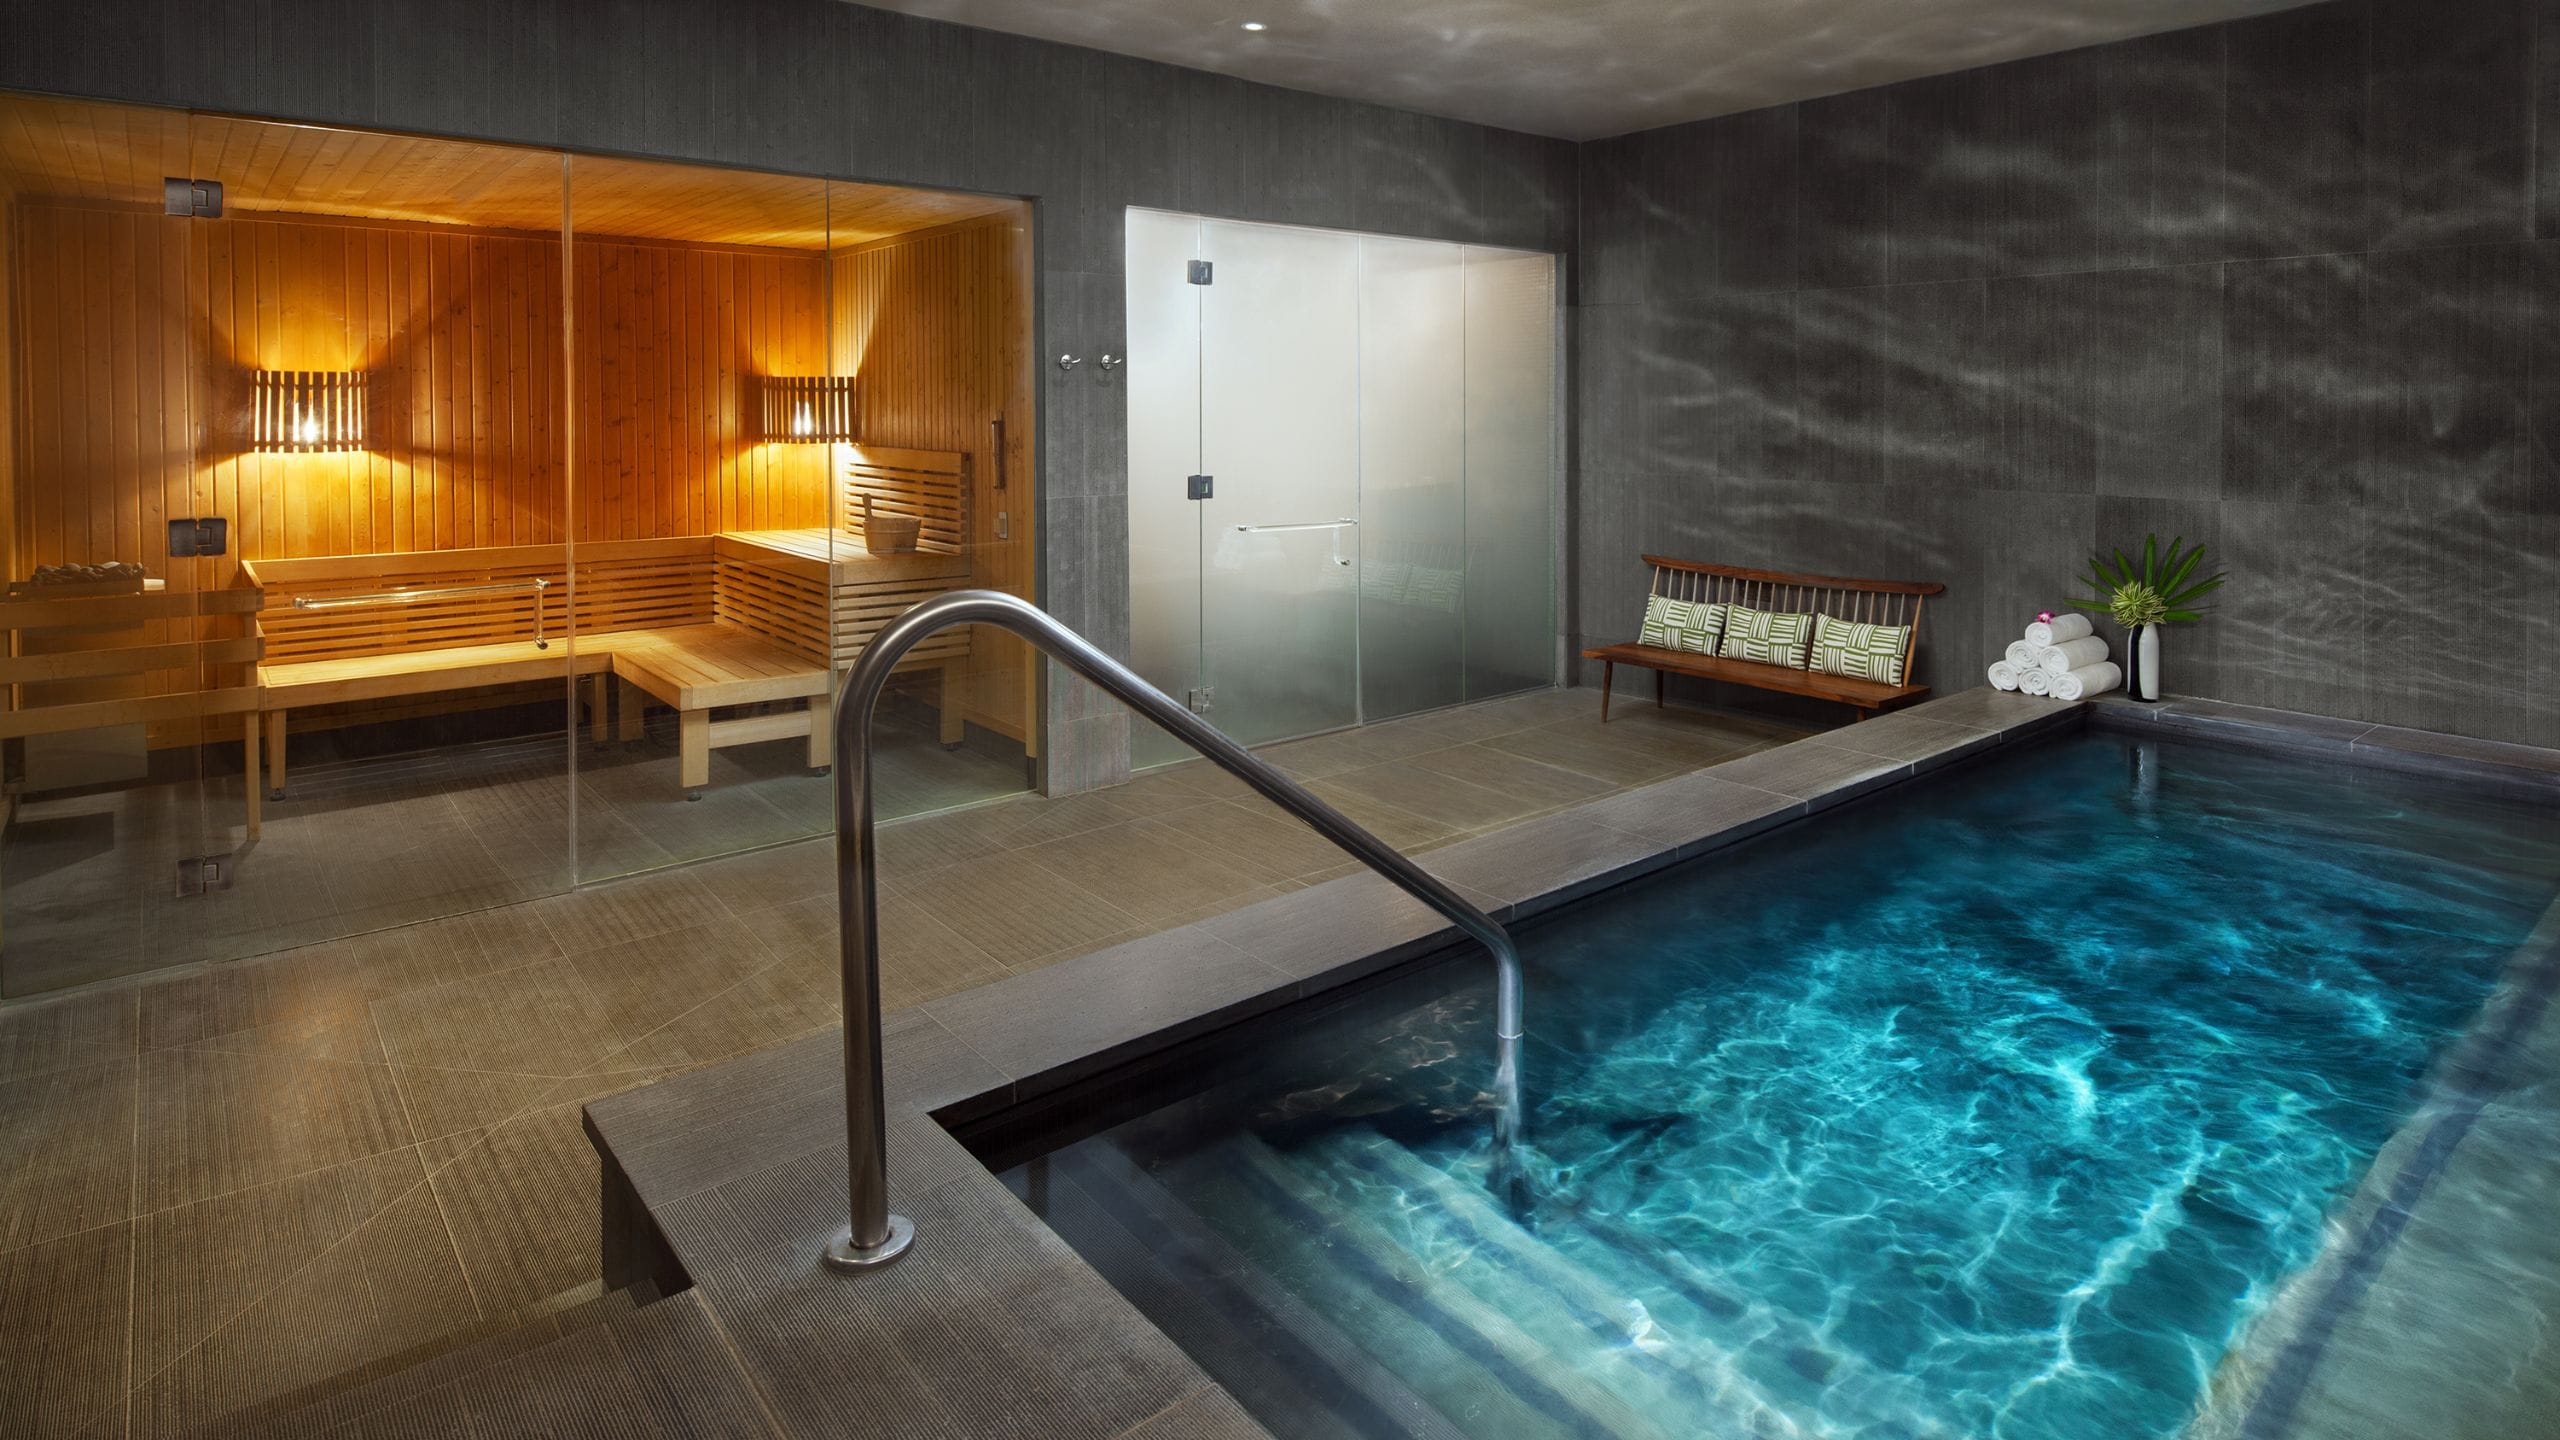 Luxury spa and salon facilities